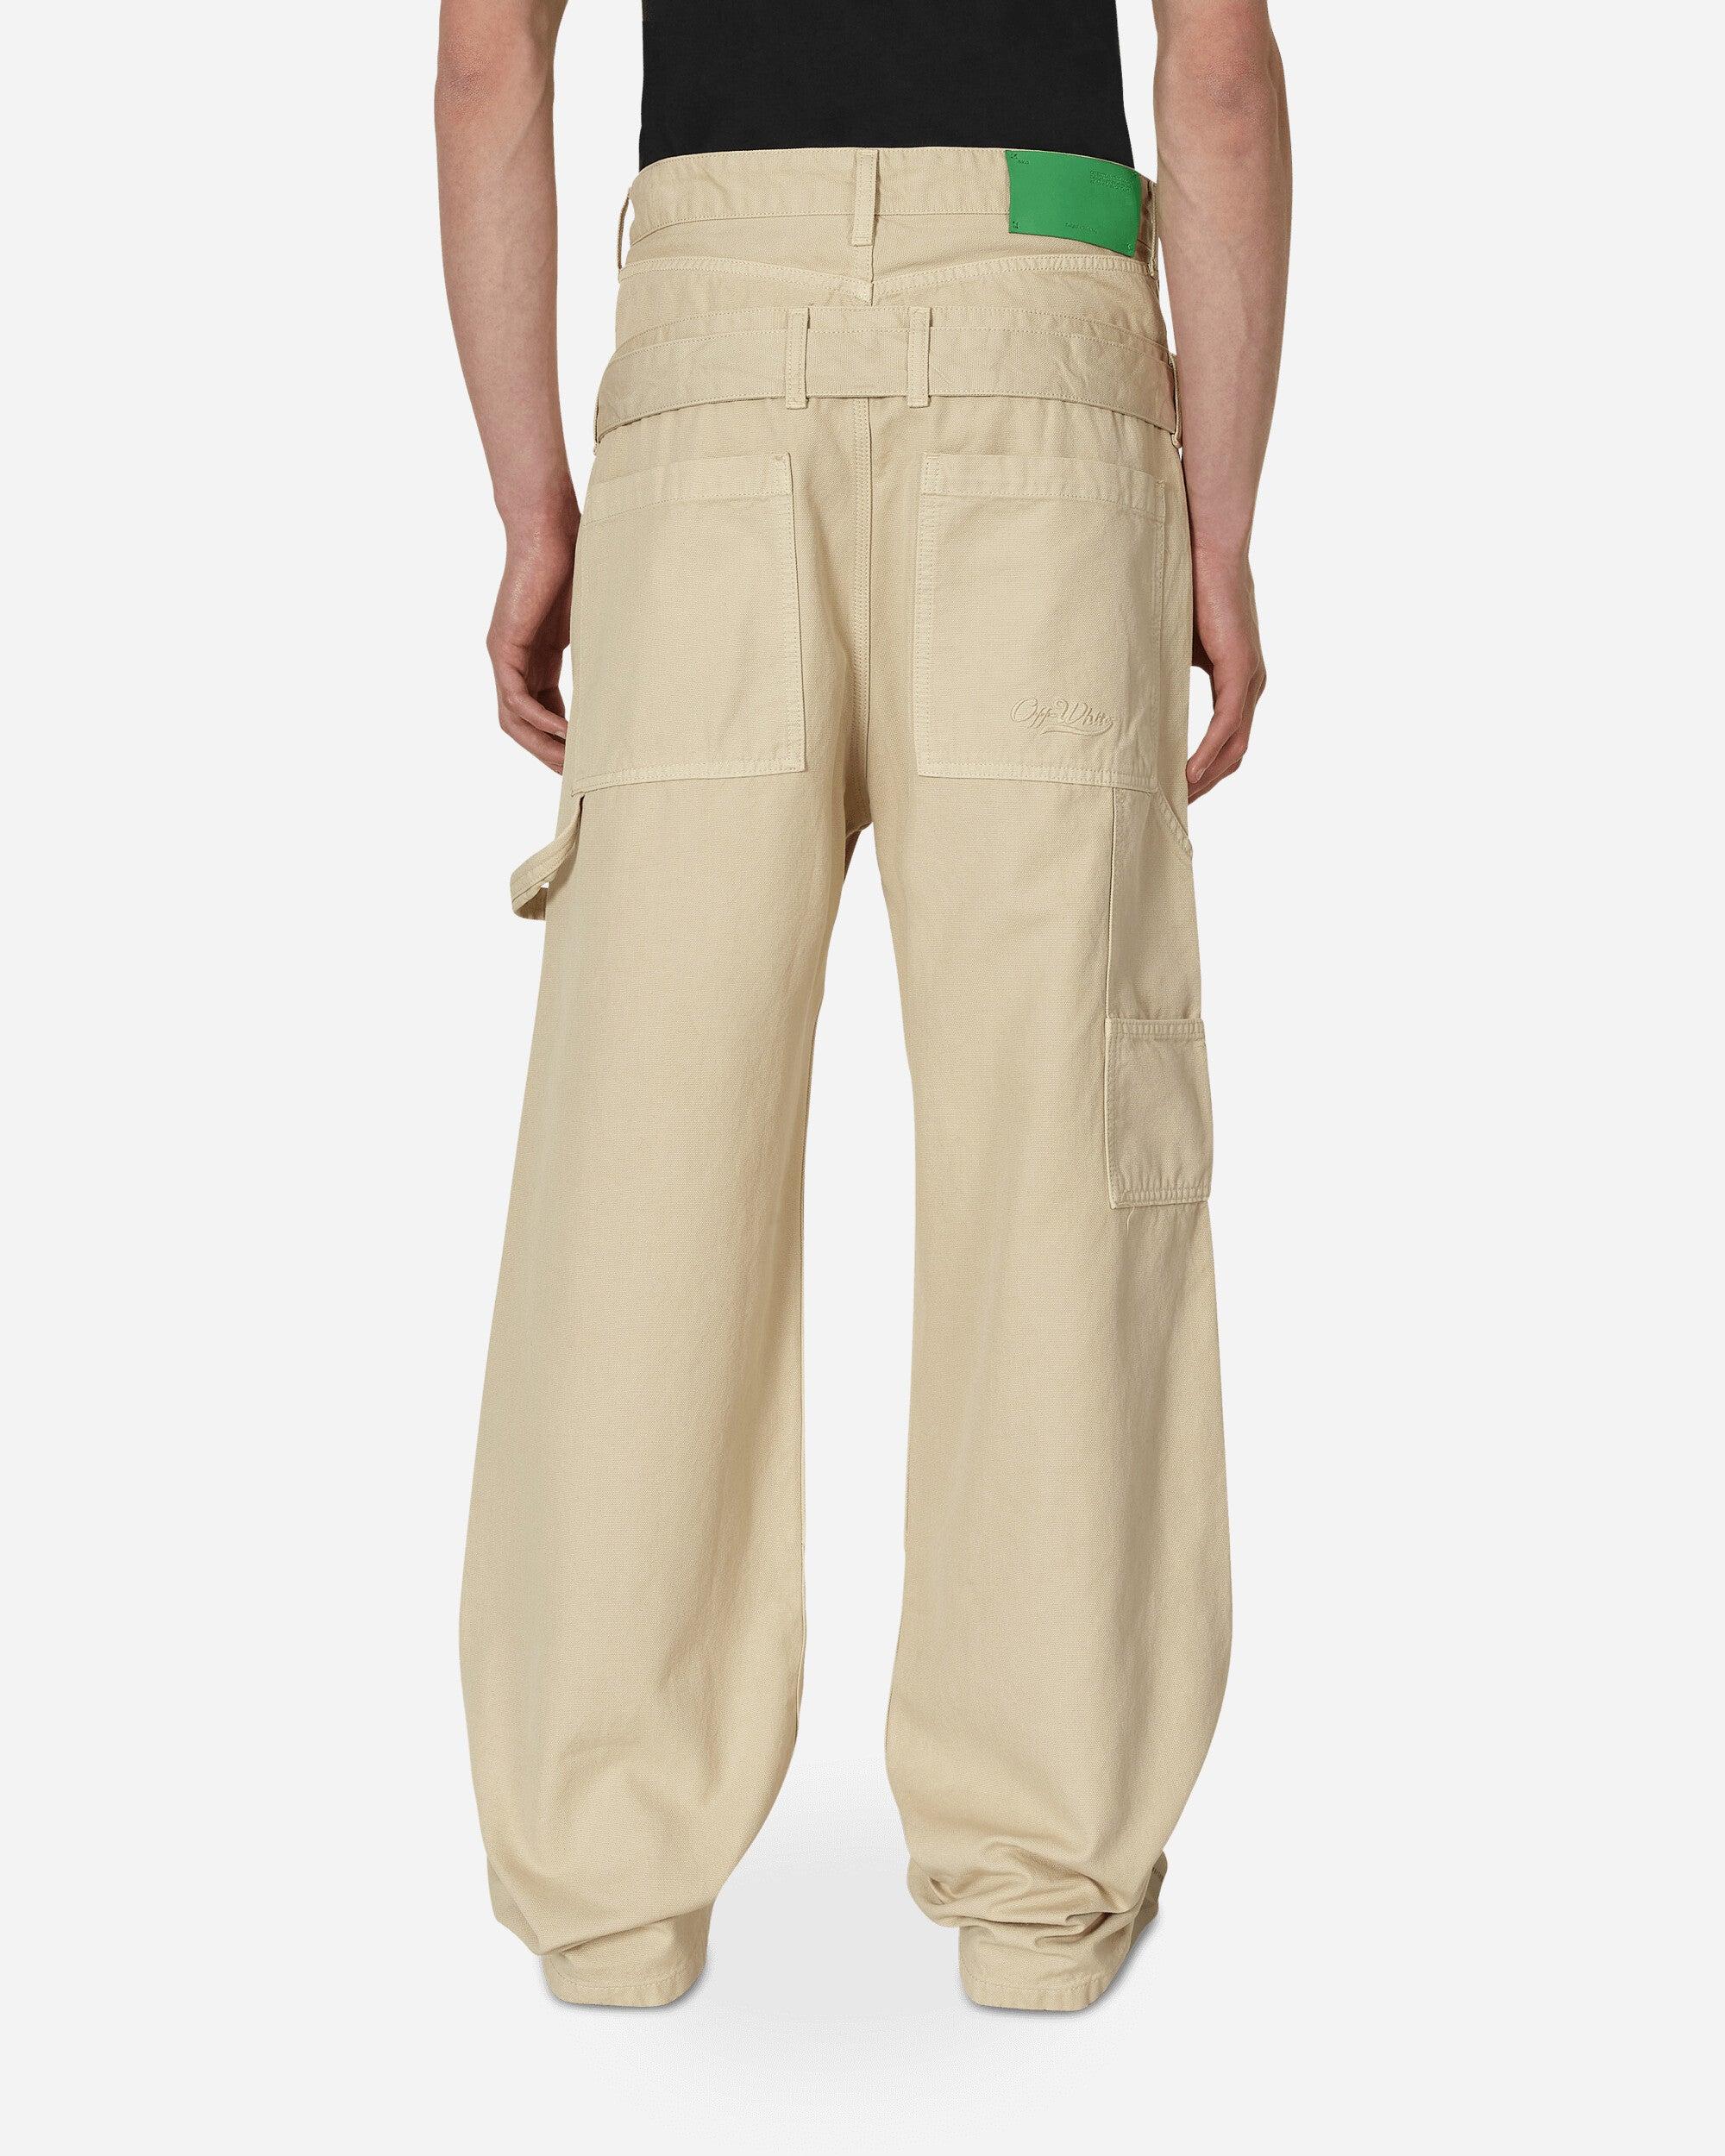 Men's Deluxe Pants - Off-White Khaki Cargo Pants